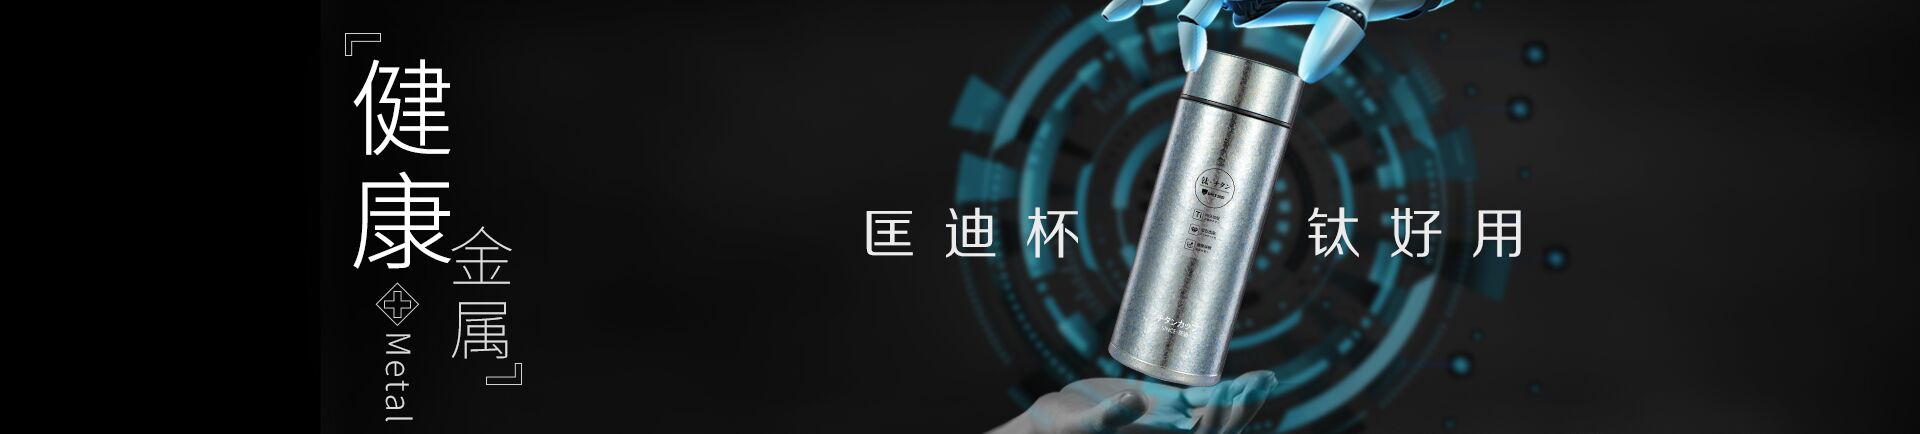 浙江匡迪工贸-澳门威尼l斯人9499欢乐娱乐城有限公司-Zhejiang kuangdi,kuangdi industry and trade - zhejiang kuangdi industry and trade - focus on the thermos cup, thermos kettle, glass research and manufacture of large-scale enterprises